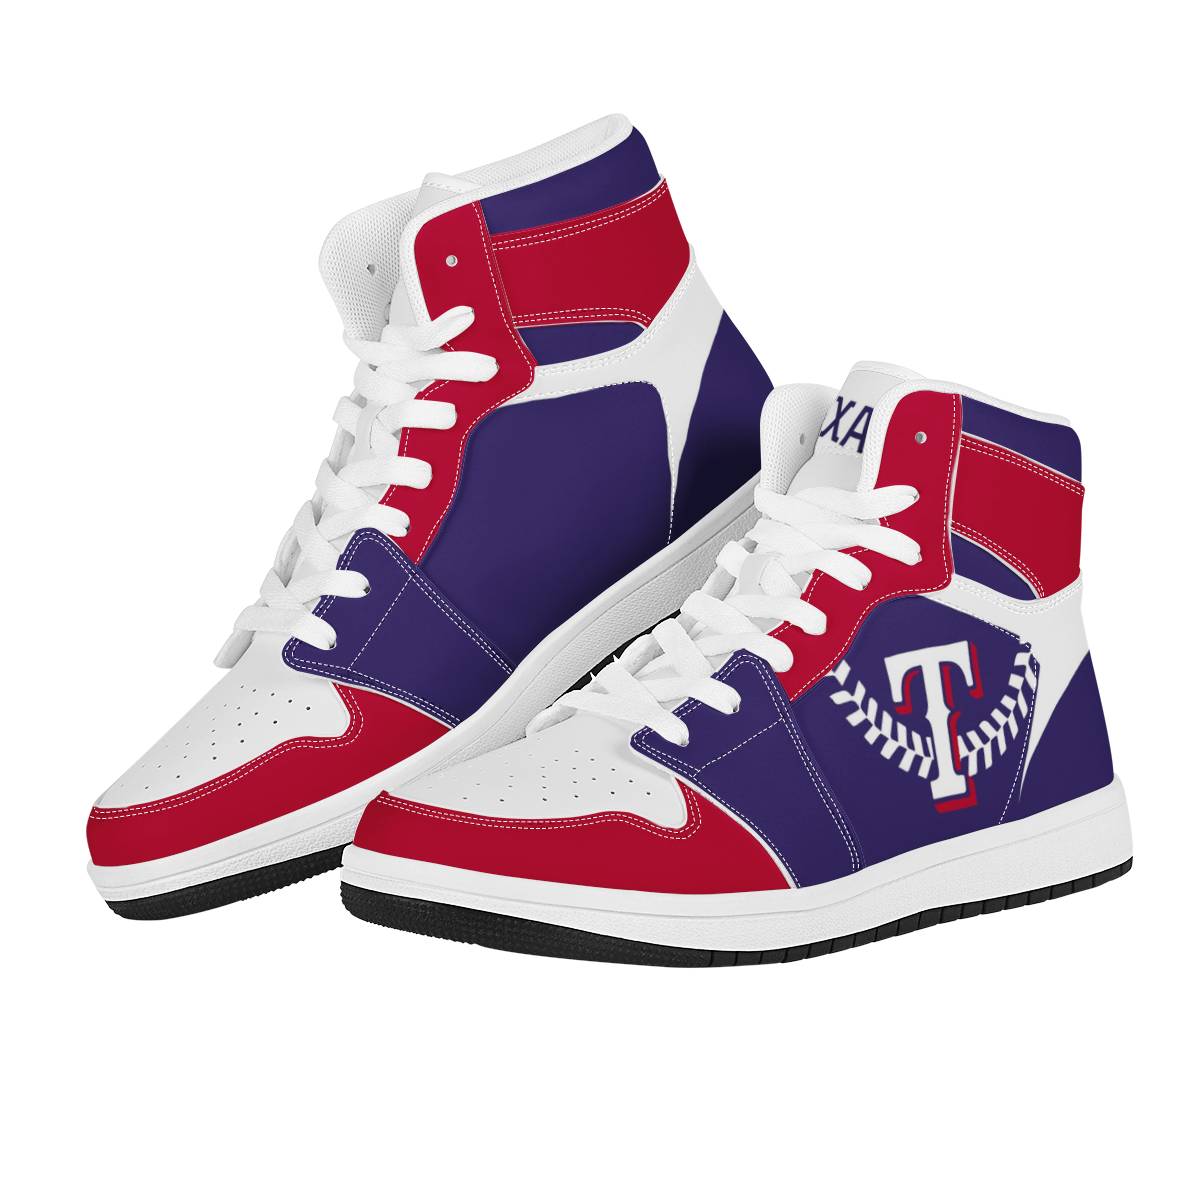 Women's Texas Rangers High Top Leather AJ1 Sneakers 001